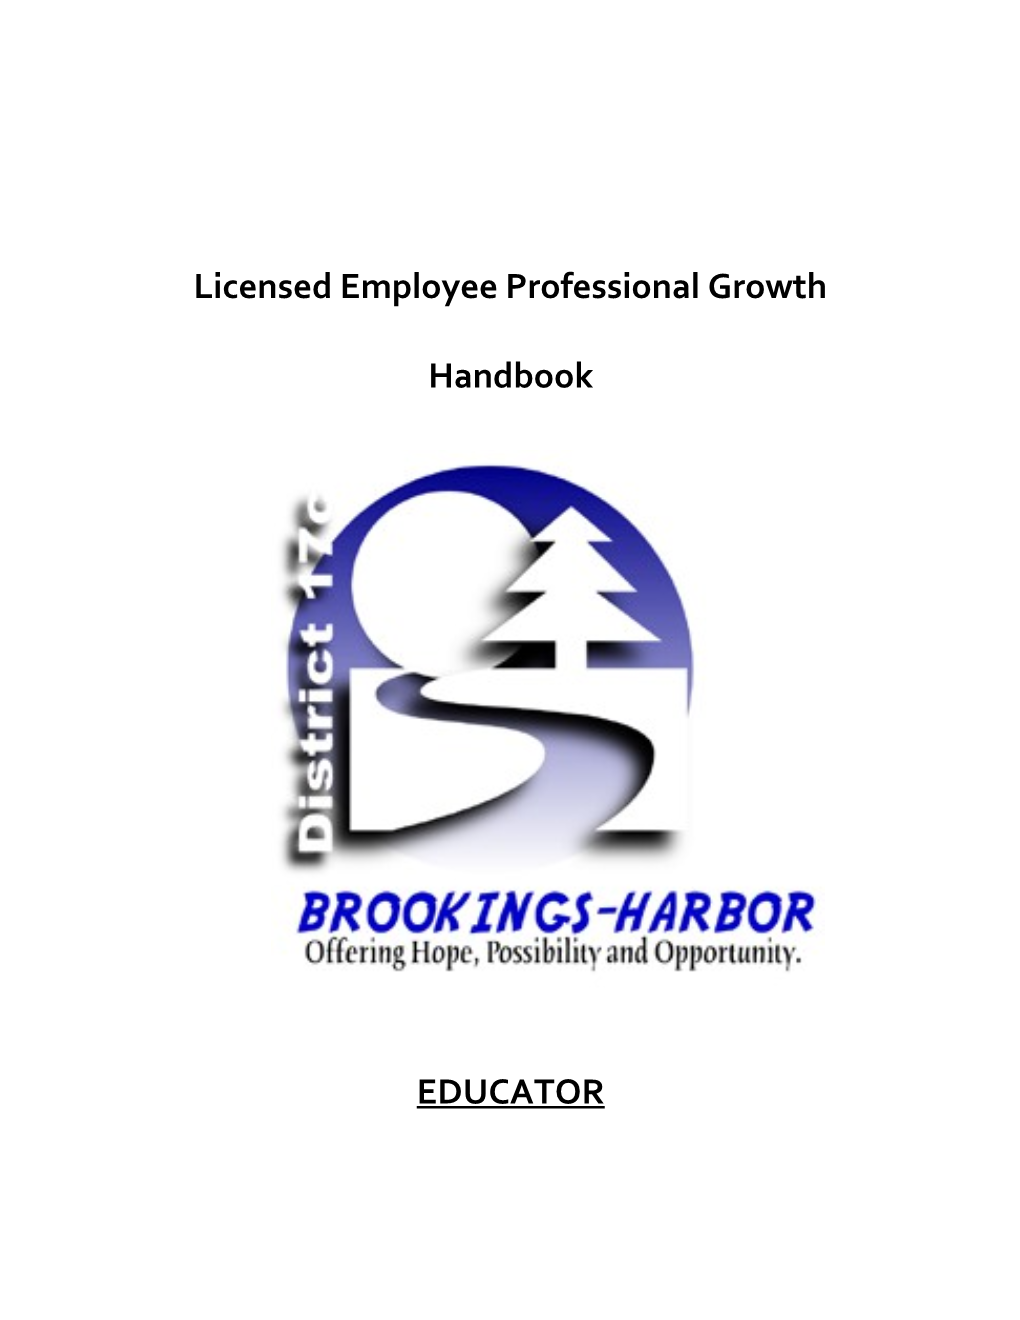 Licensed Employee Professional Growth Handbook